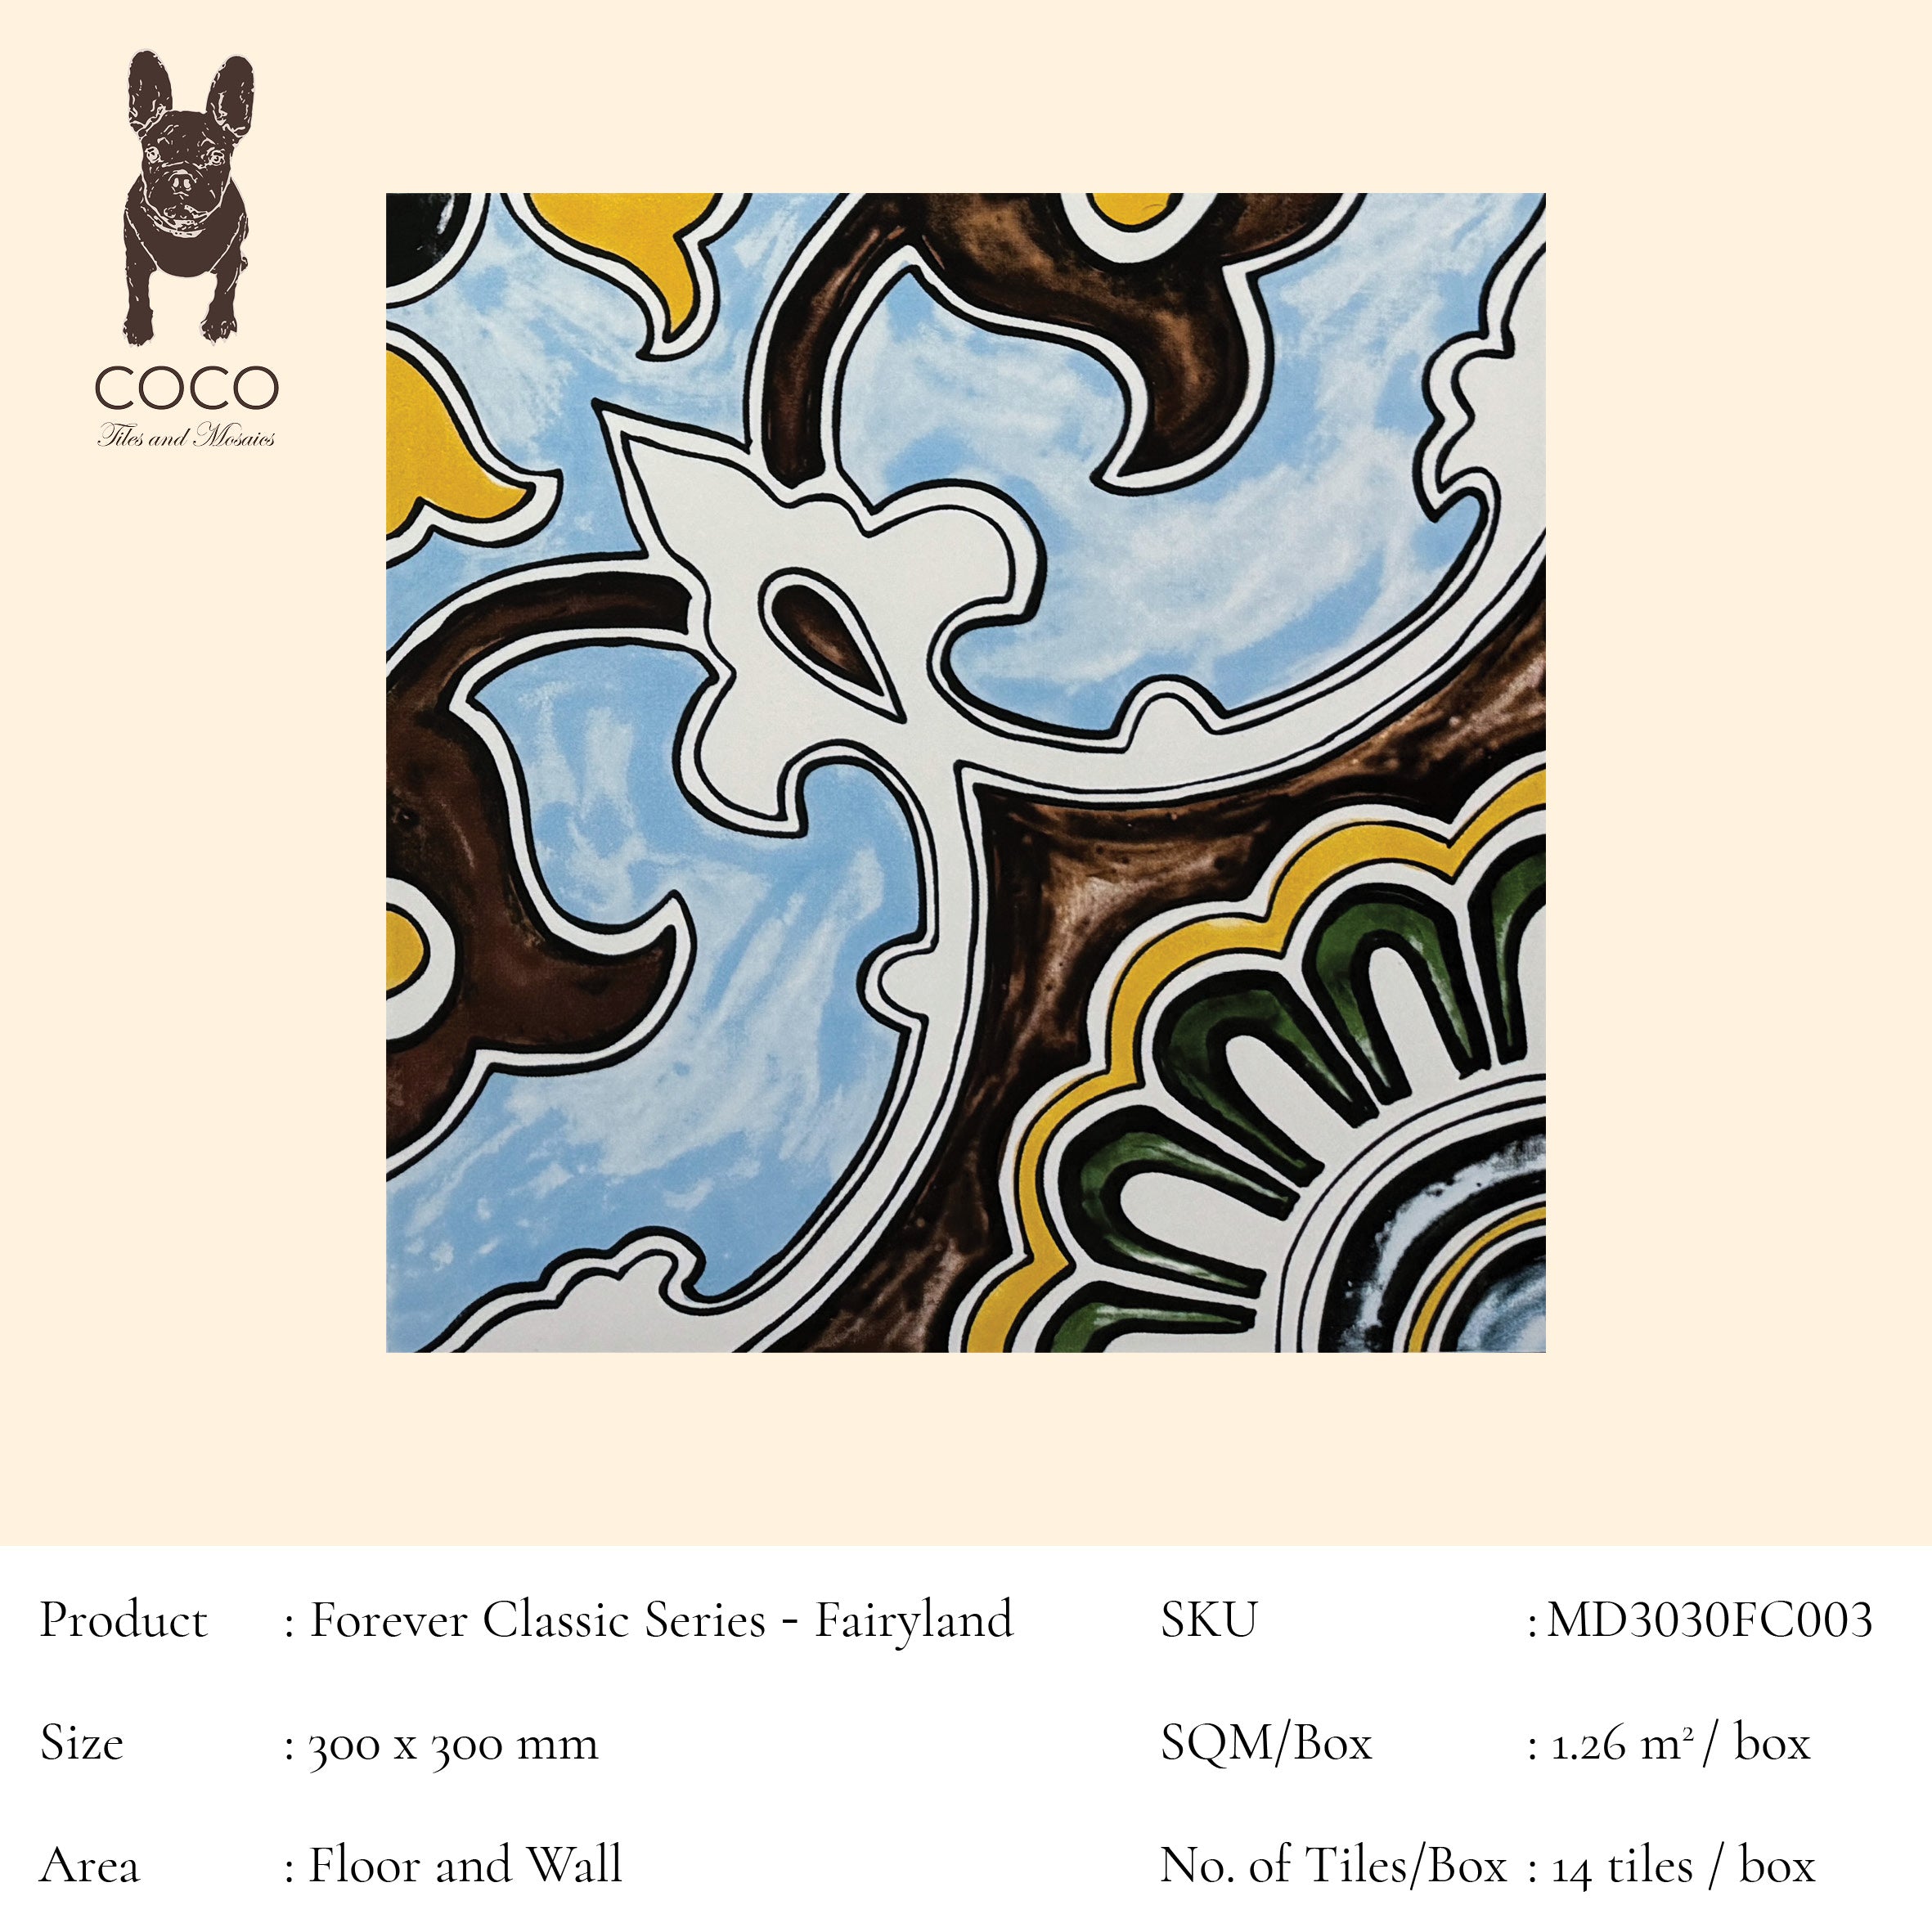 Mediterranean Fever Series - Forever Classic Fairyland 300x300mm Ceramic Tile